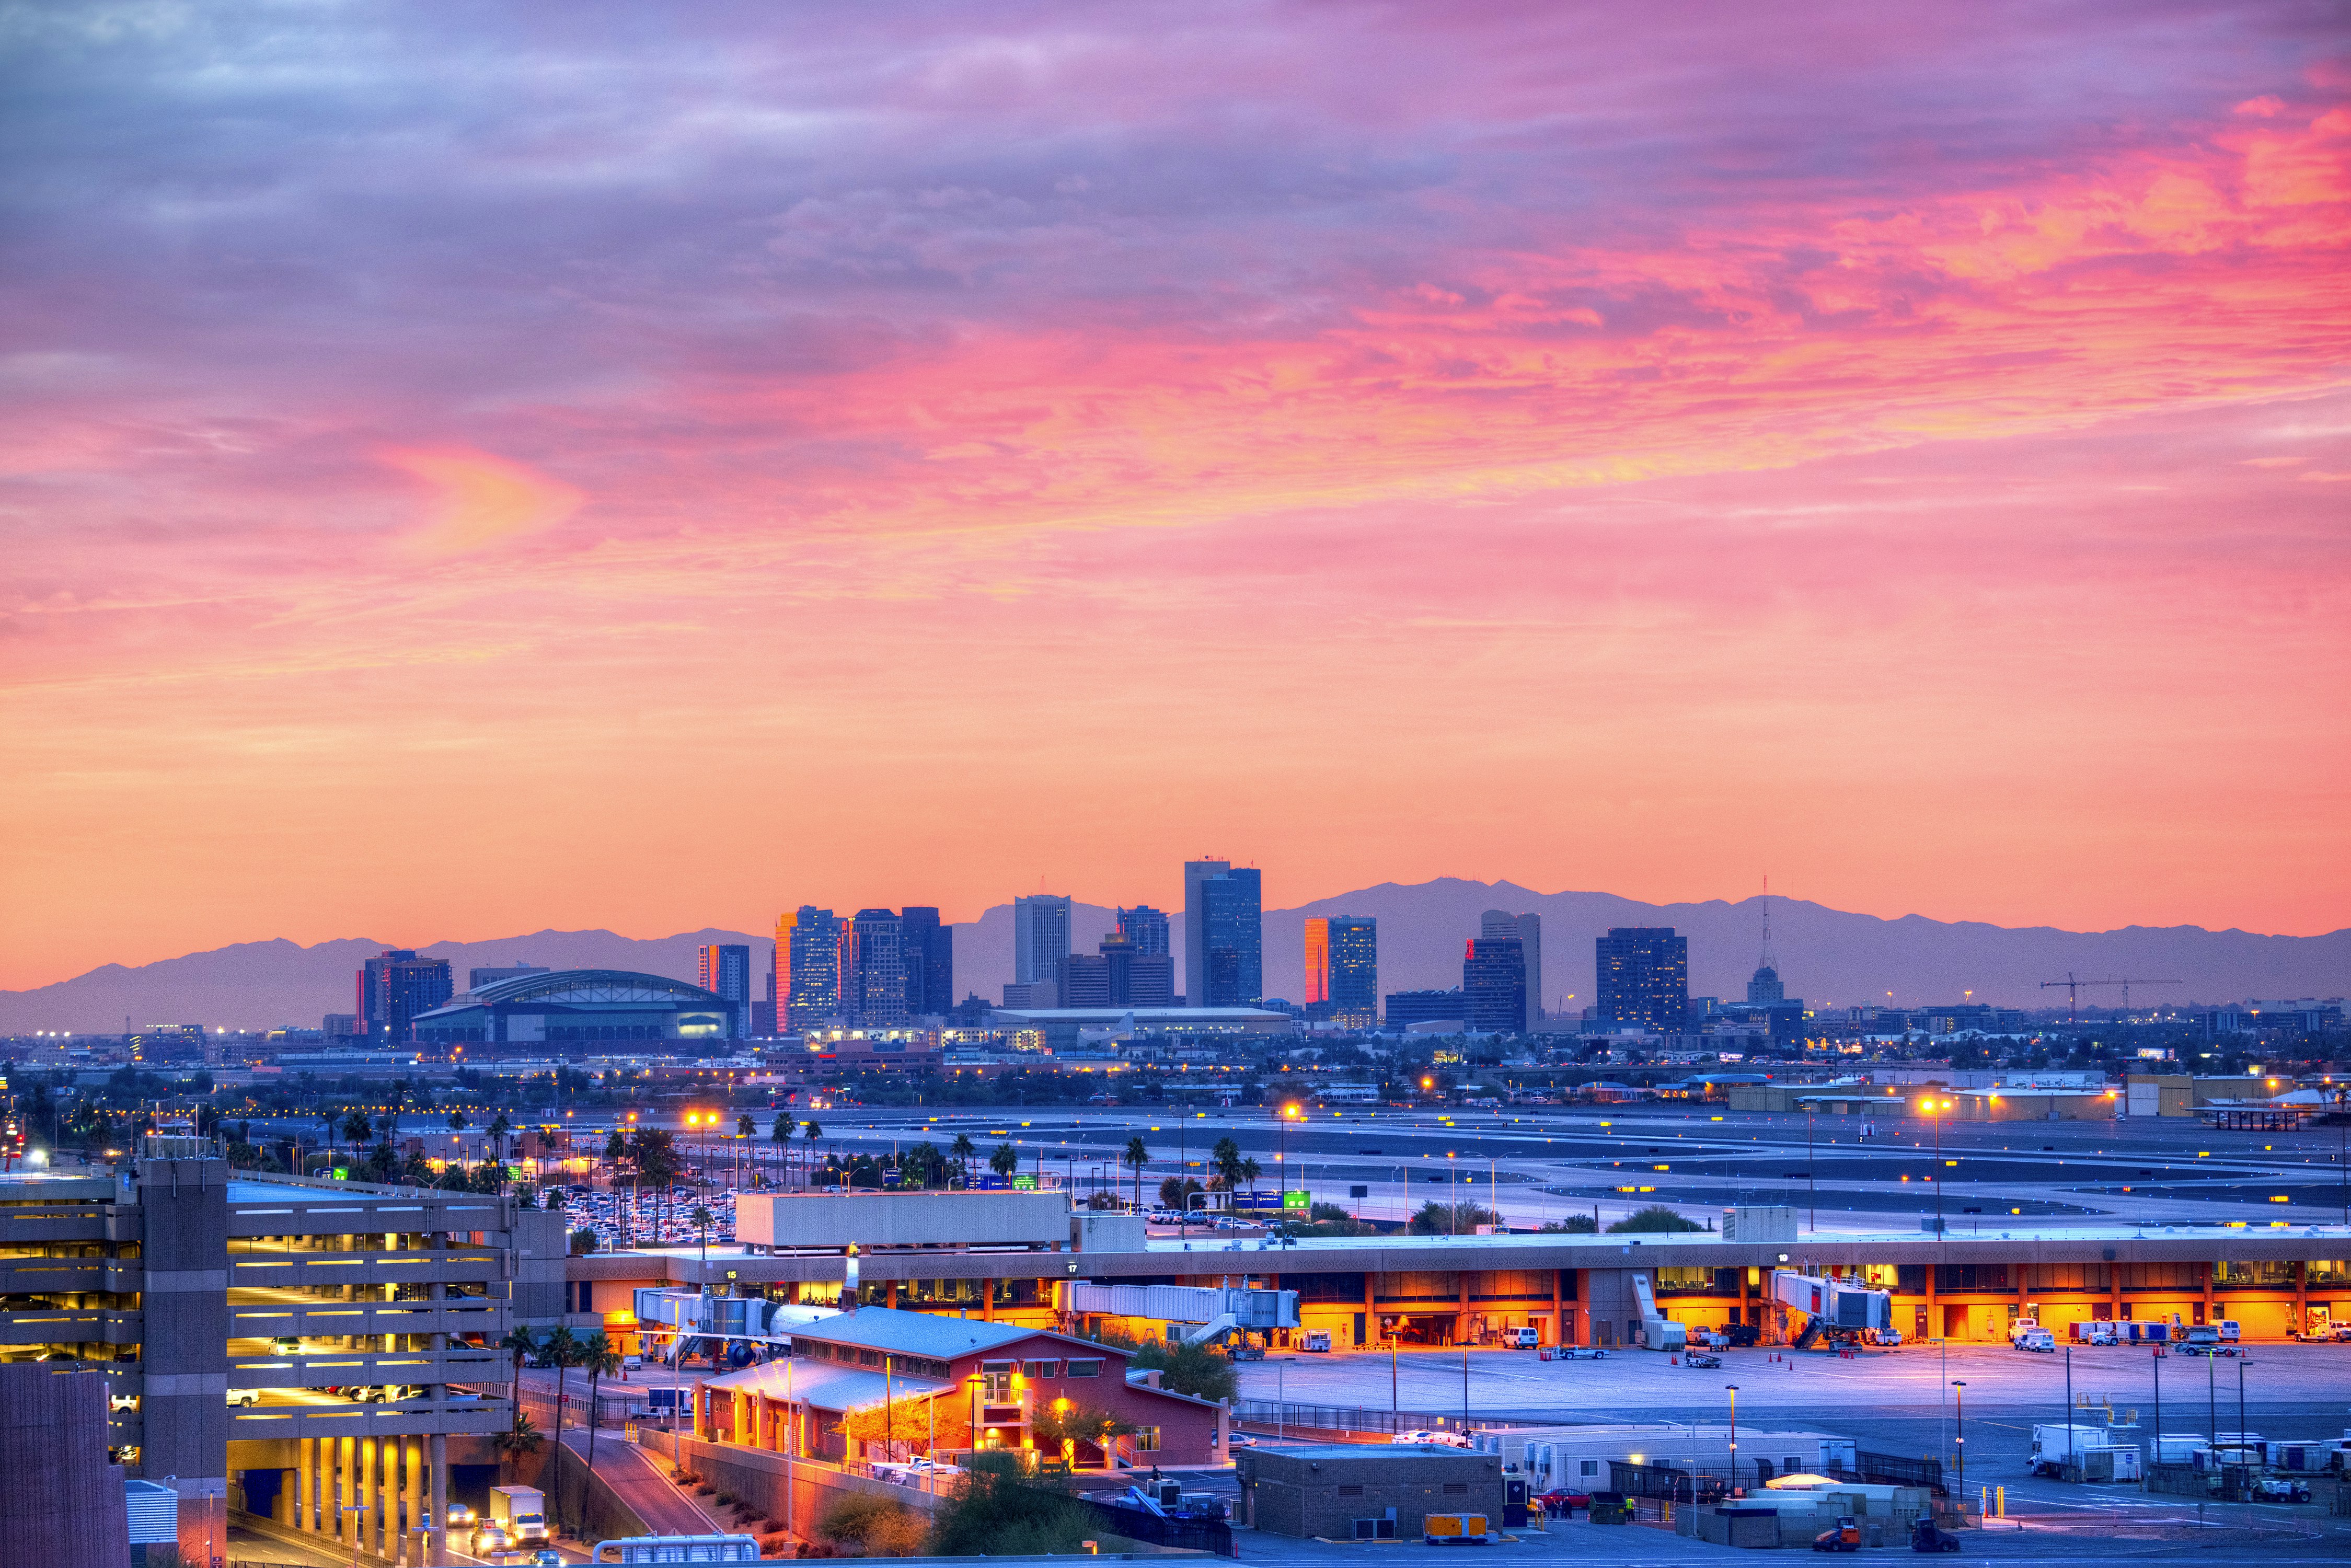 A pink sunrise over the skyline of Phoenix, Arizona